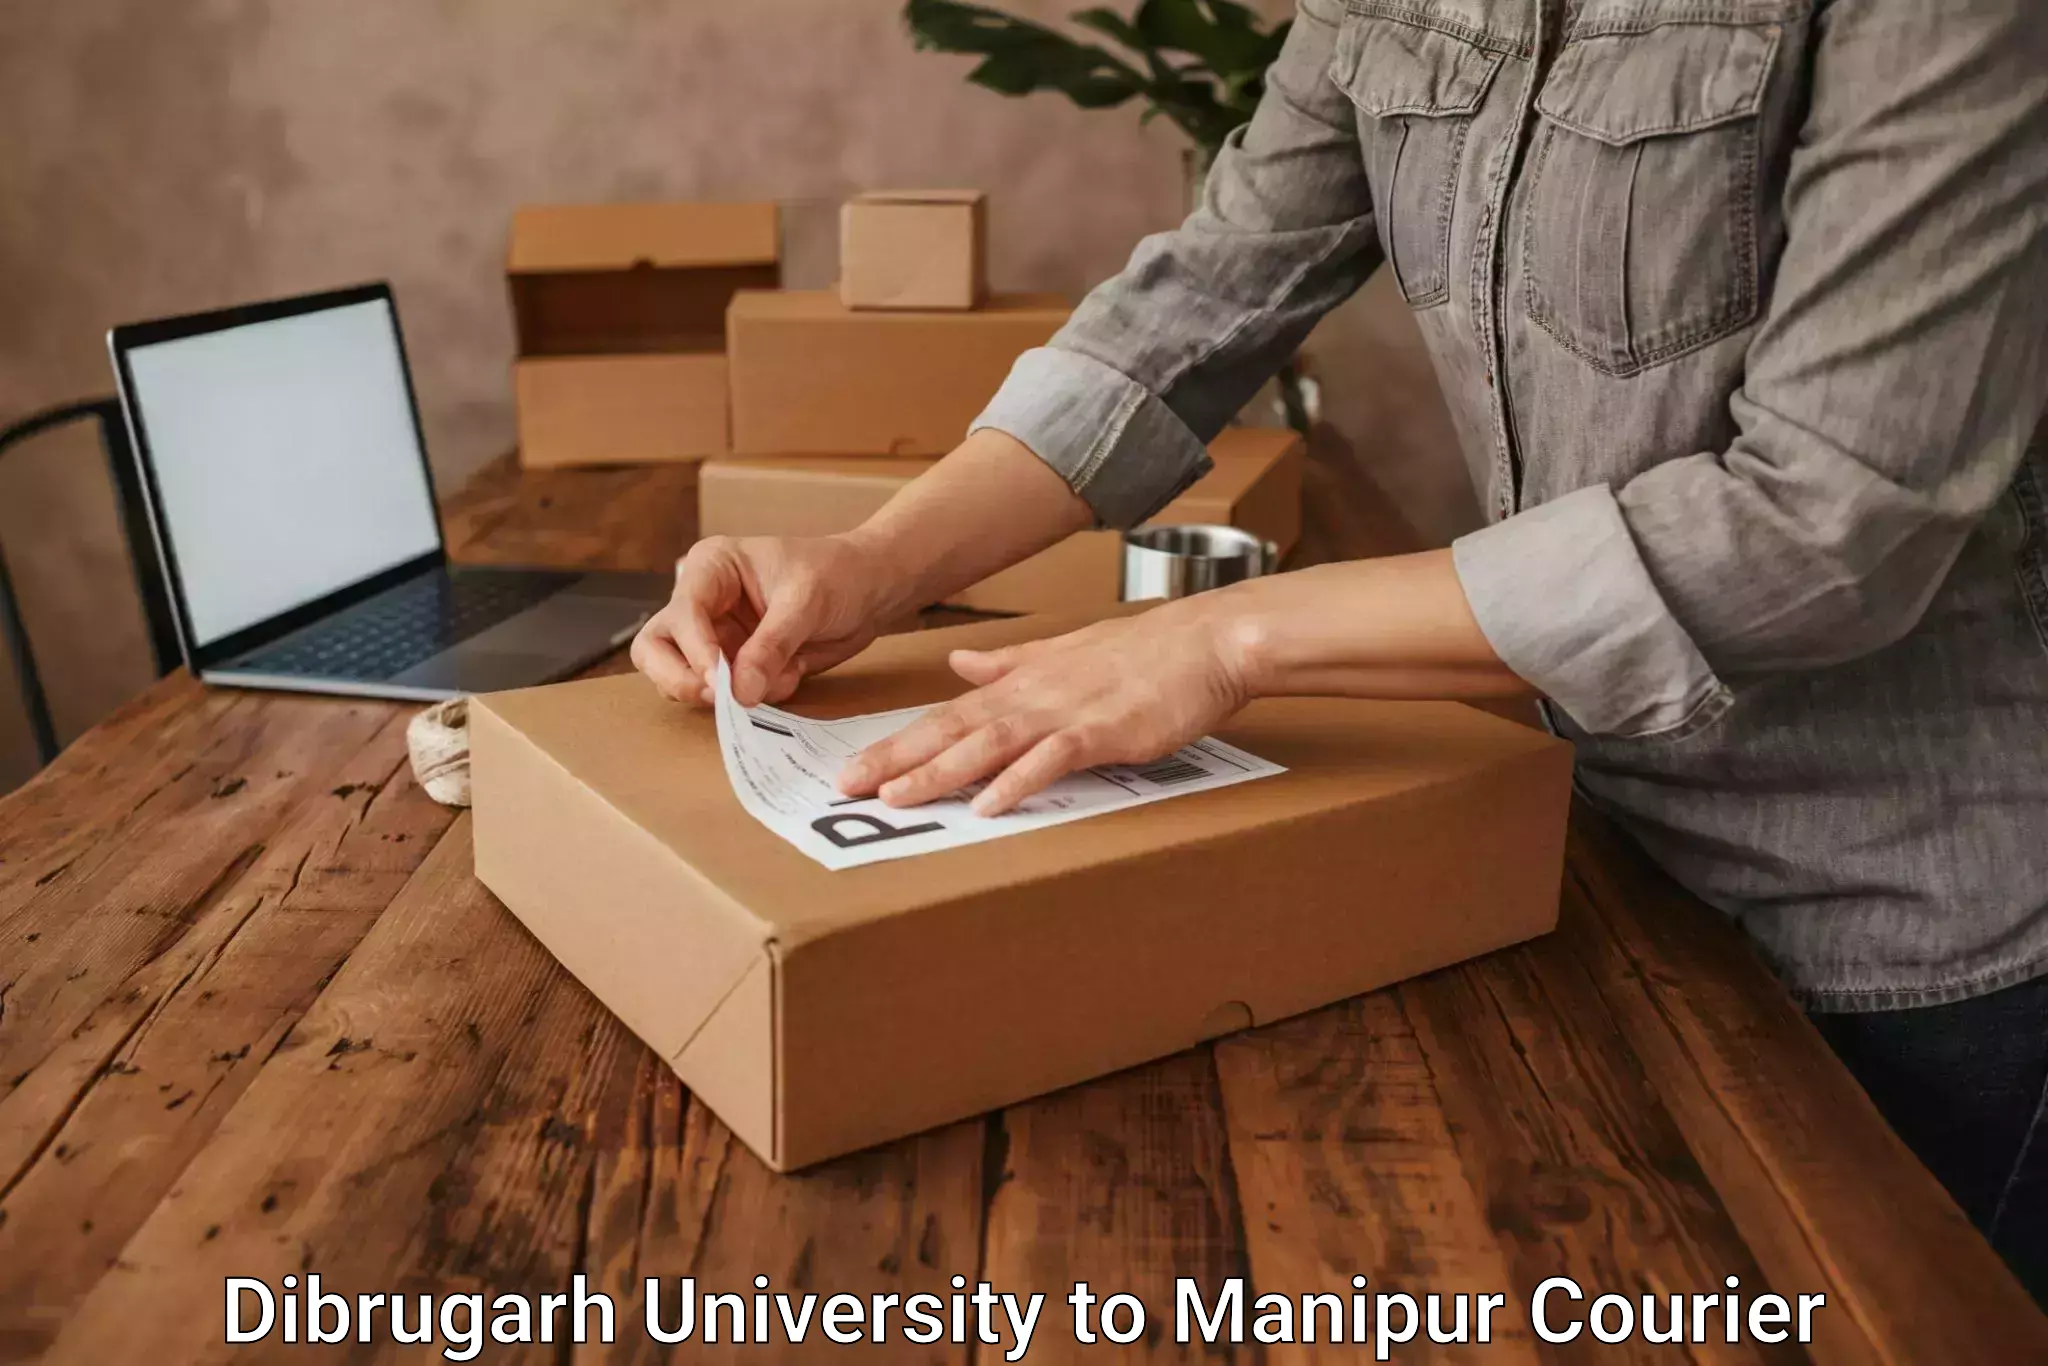 Courier service partnerships Dibrugarh University to Churachandpur